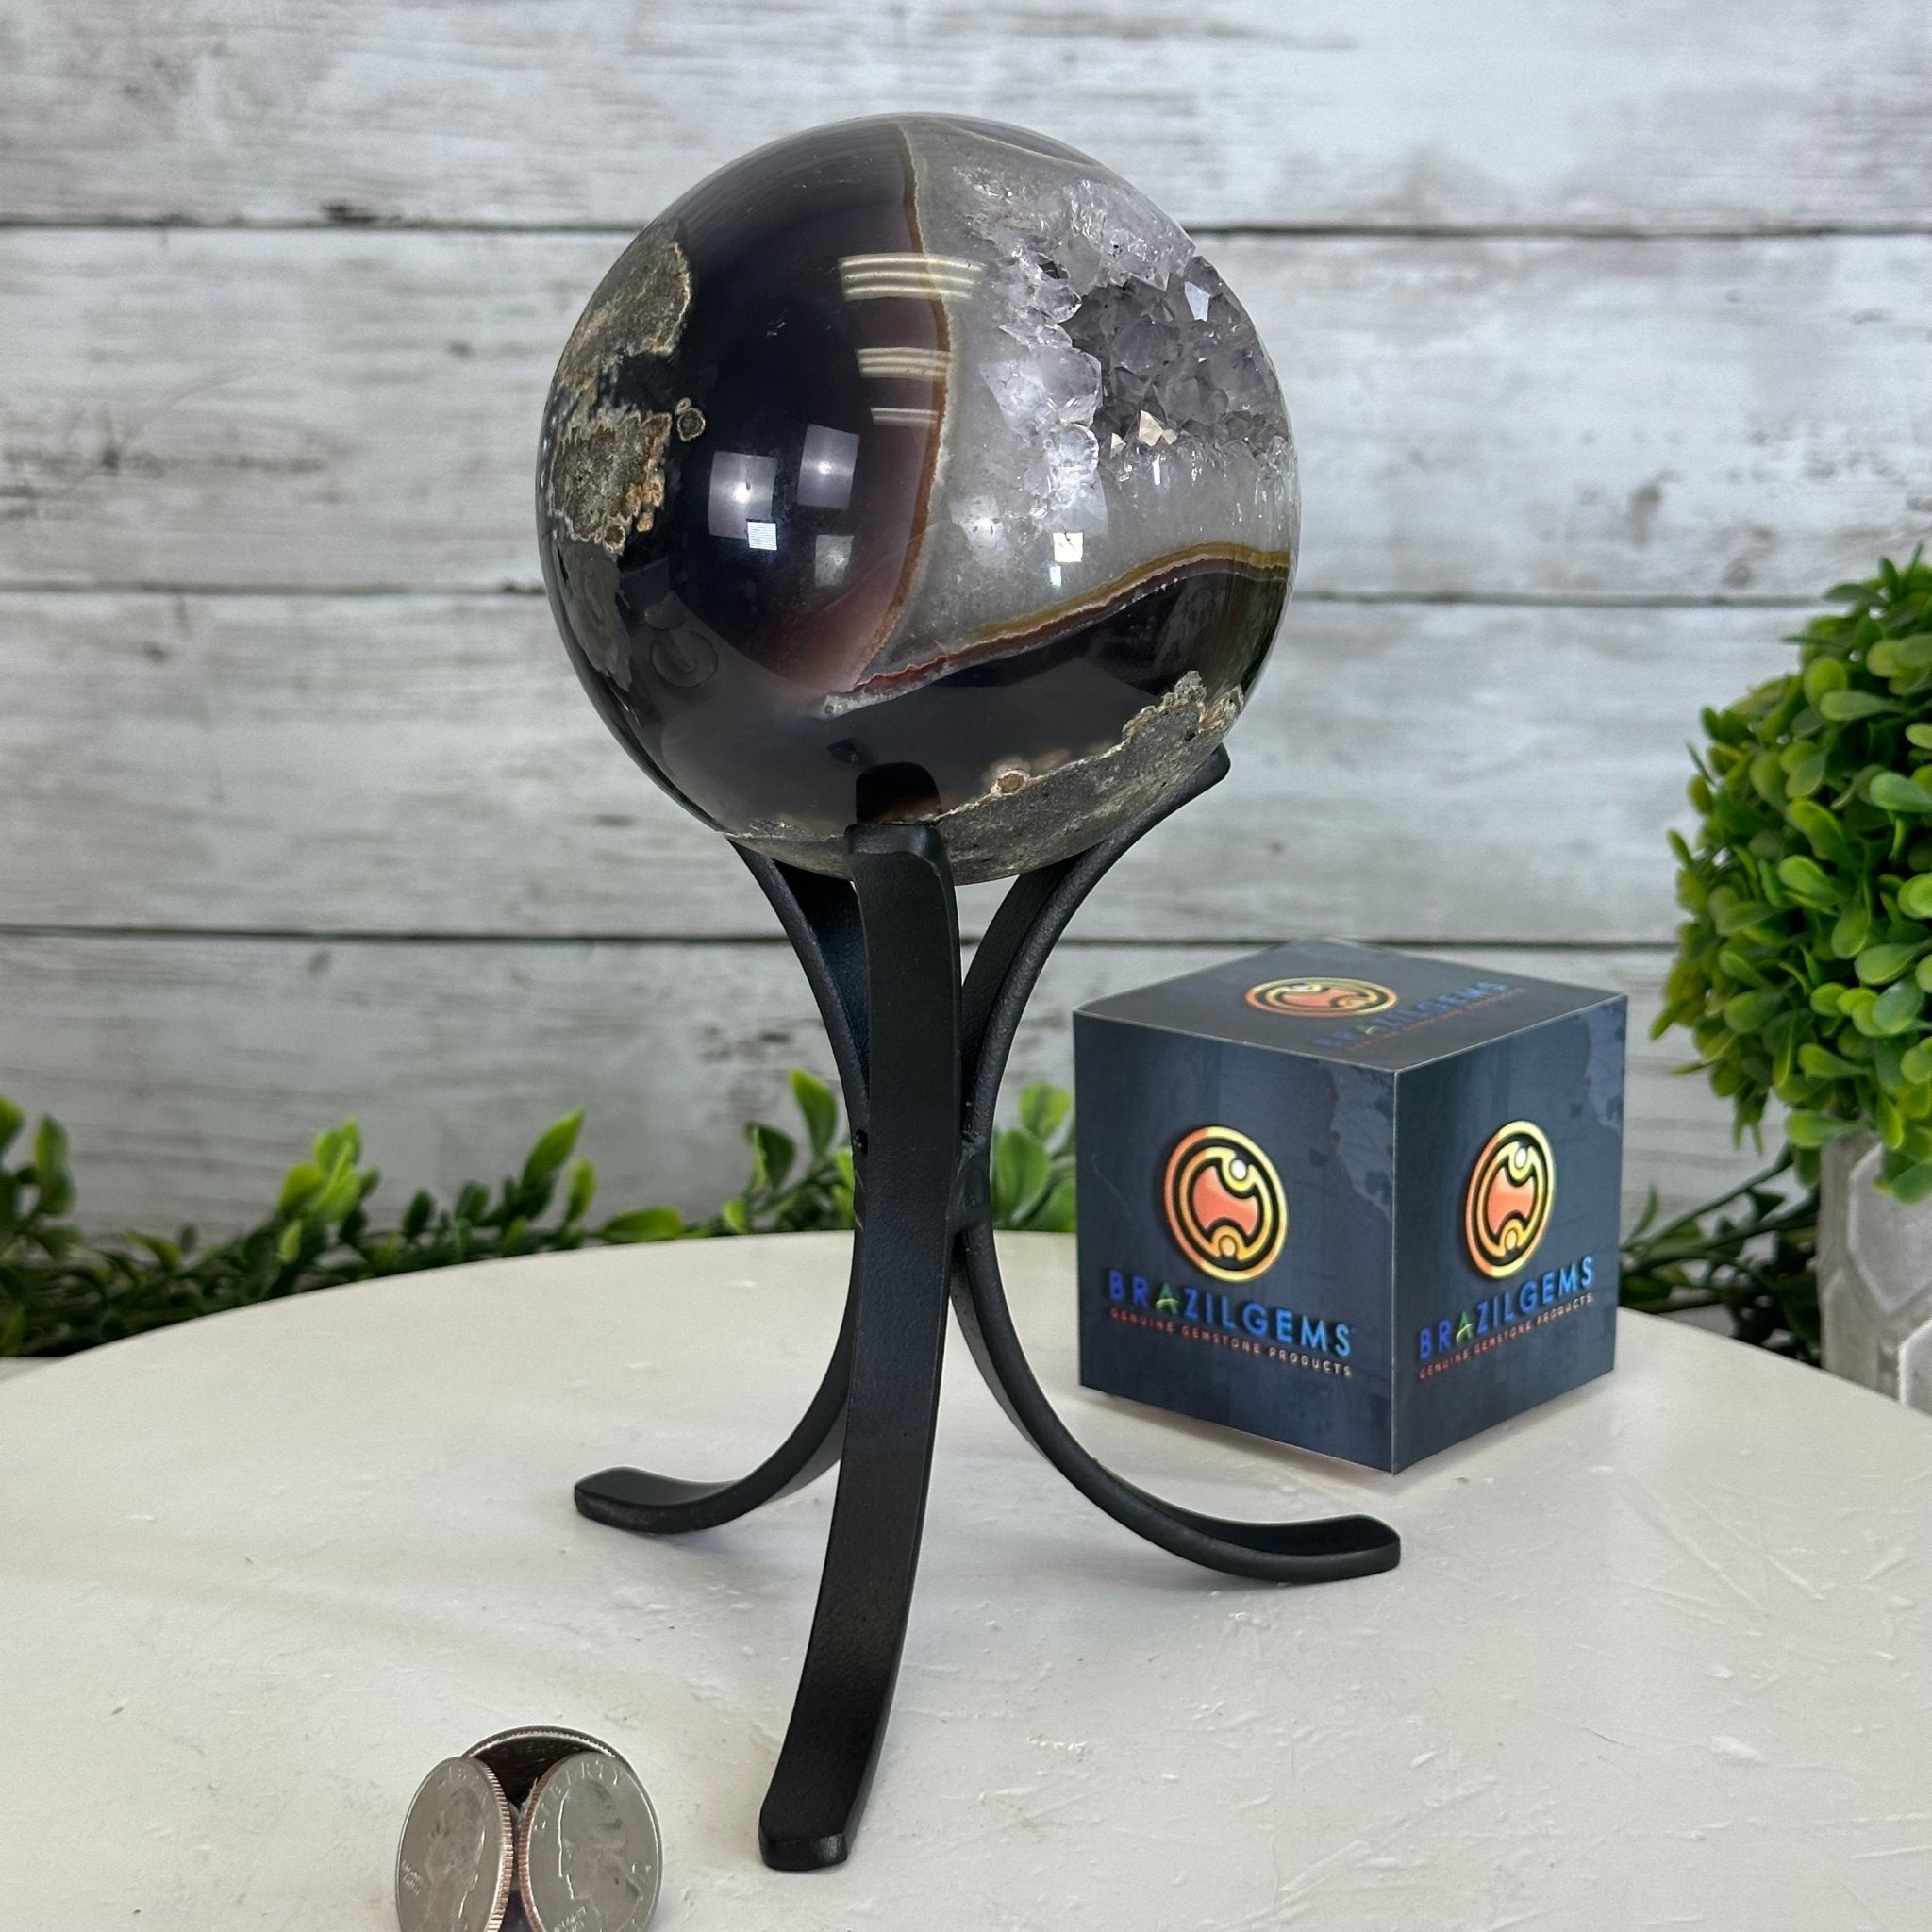 Druzy Amethyst Sphere on a Metal Stand, 2.6 lbs & 8.2" Tall #5630-0050 - Brazil GemsBrazil GemsDruzy Amethyst Sphere on a Metal Stand, 2.6 lbs & 8.2" Tall #5630-0050Spheres5630-0050